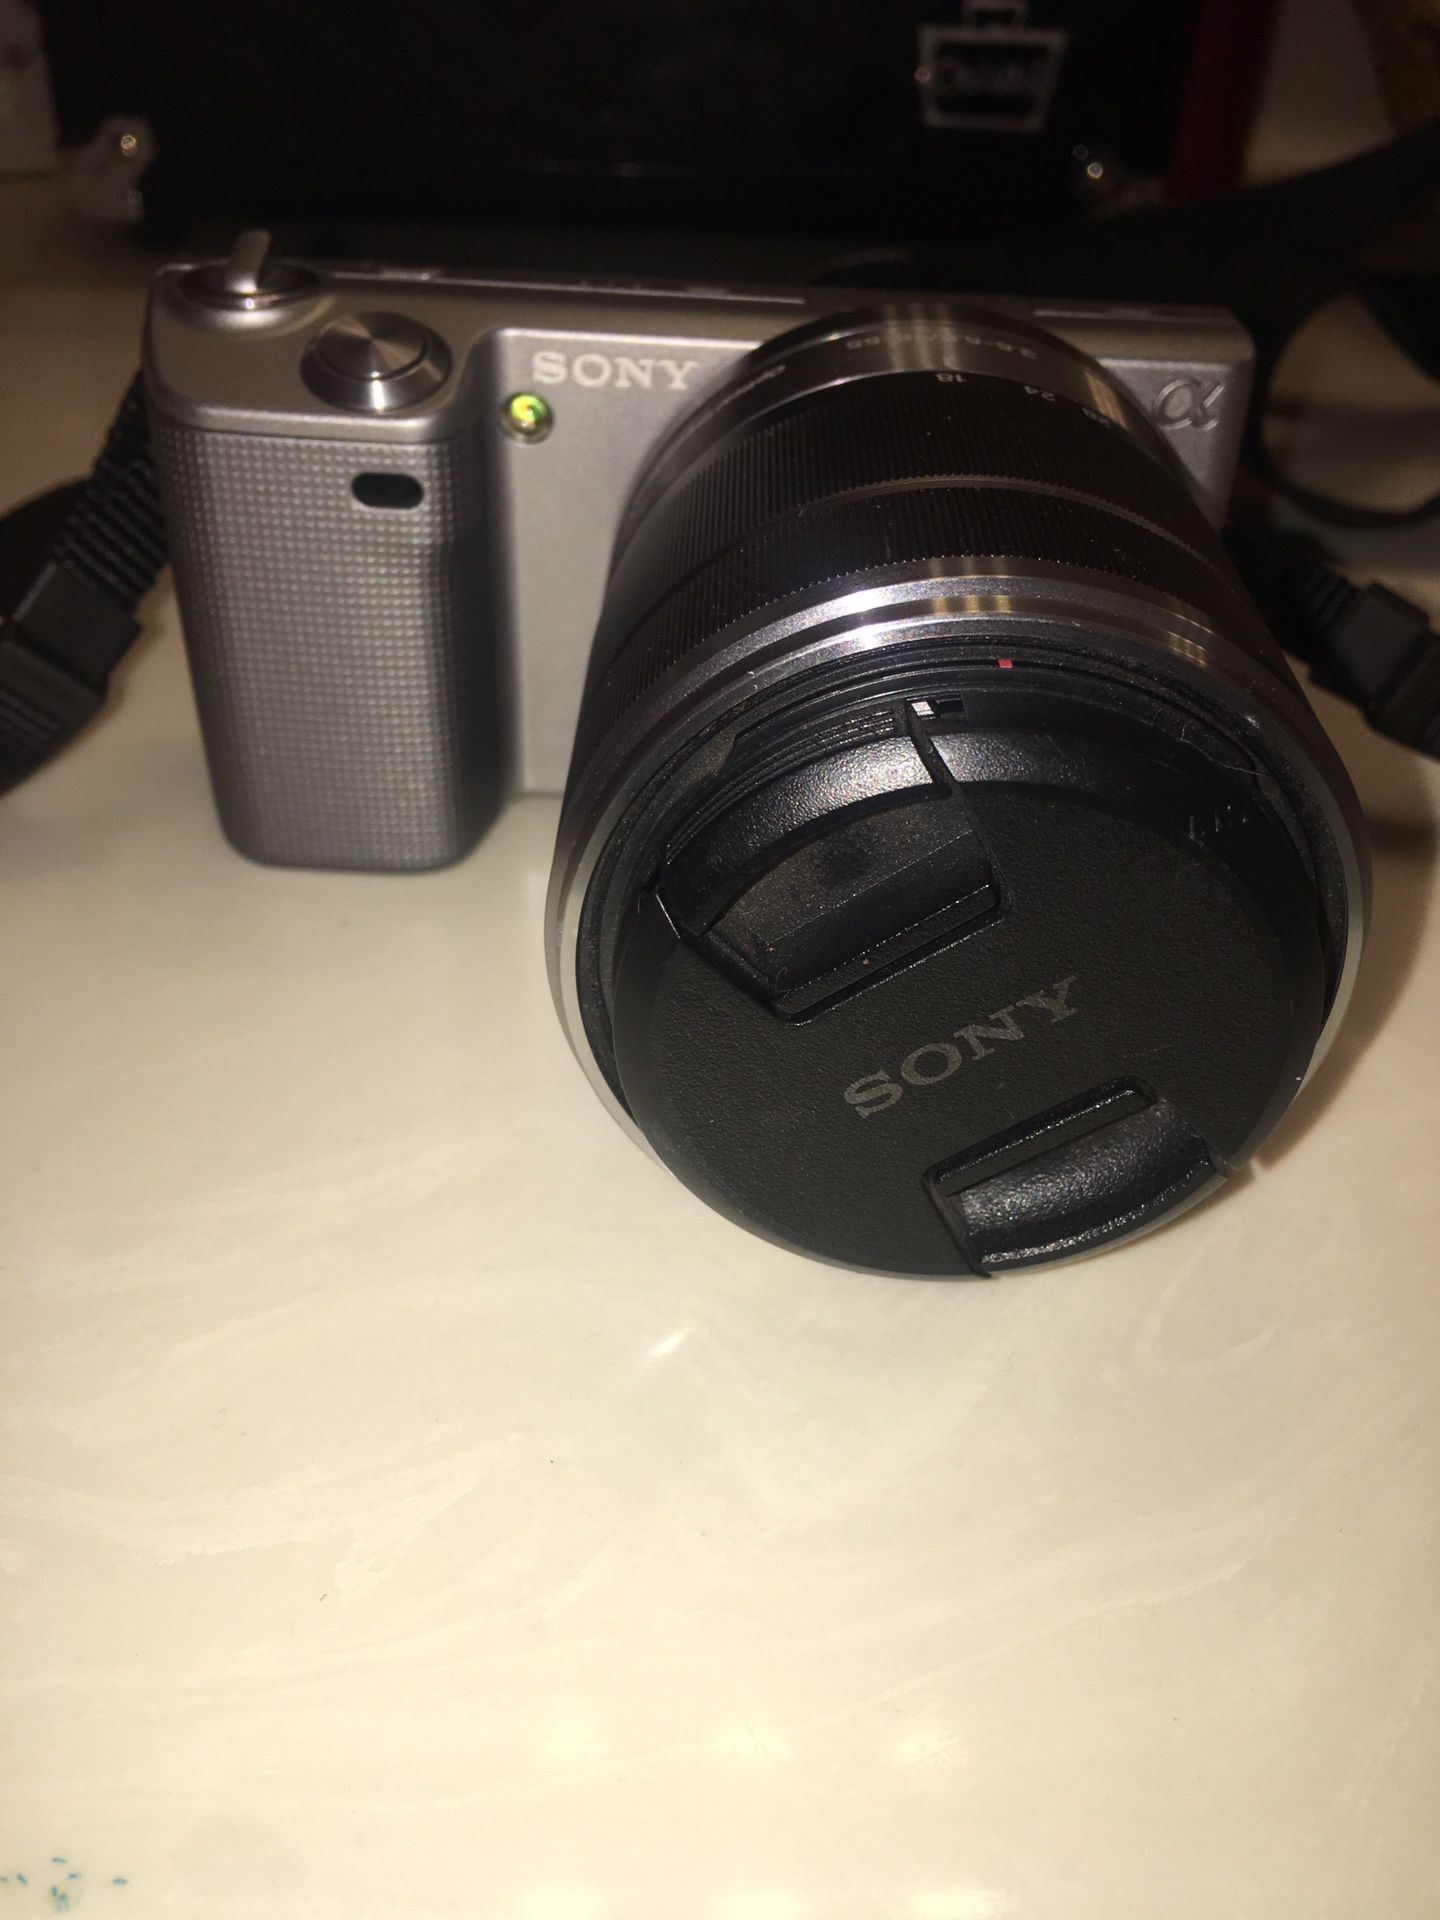 Sony Alpha Nex-5 14.2 mp digital camera silver kit w/E OSS 18-55mm Lens